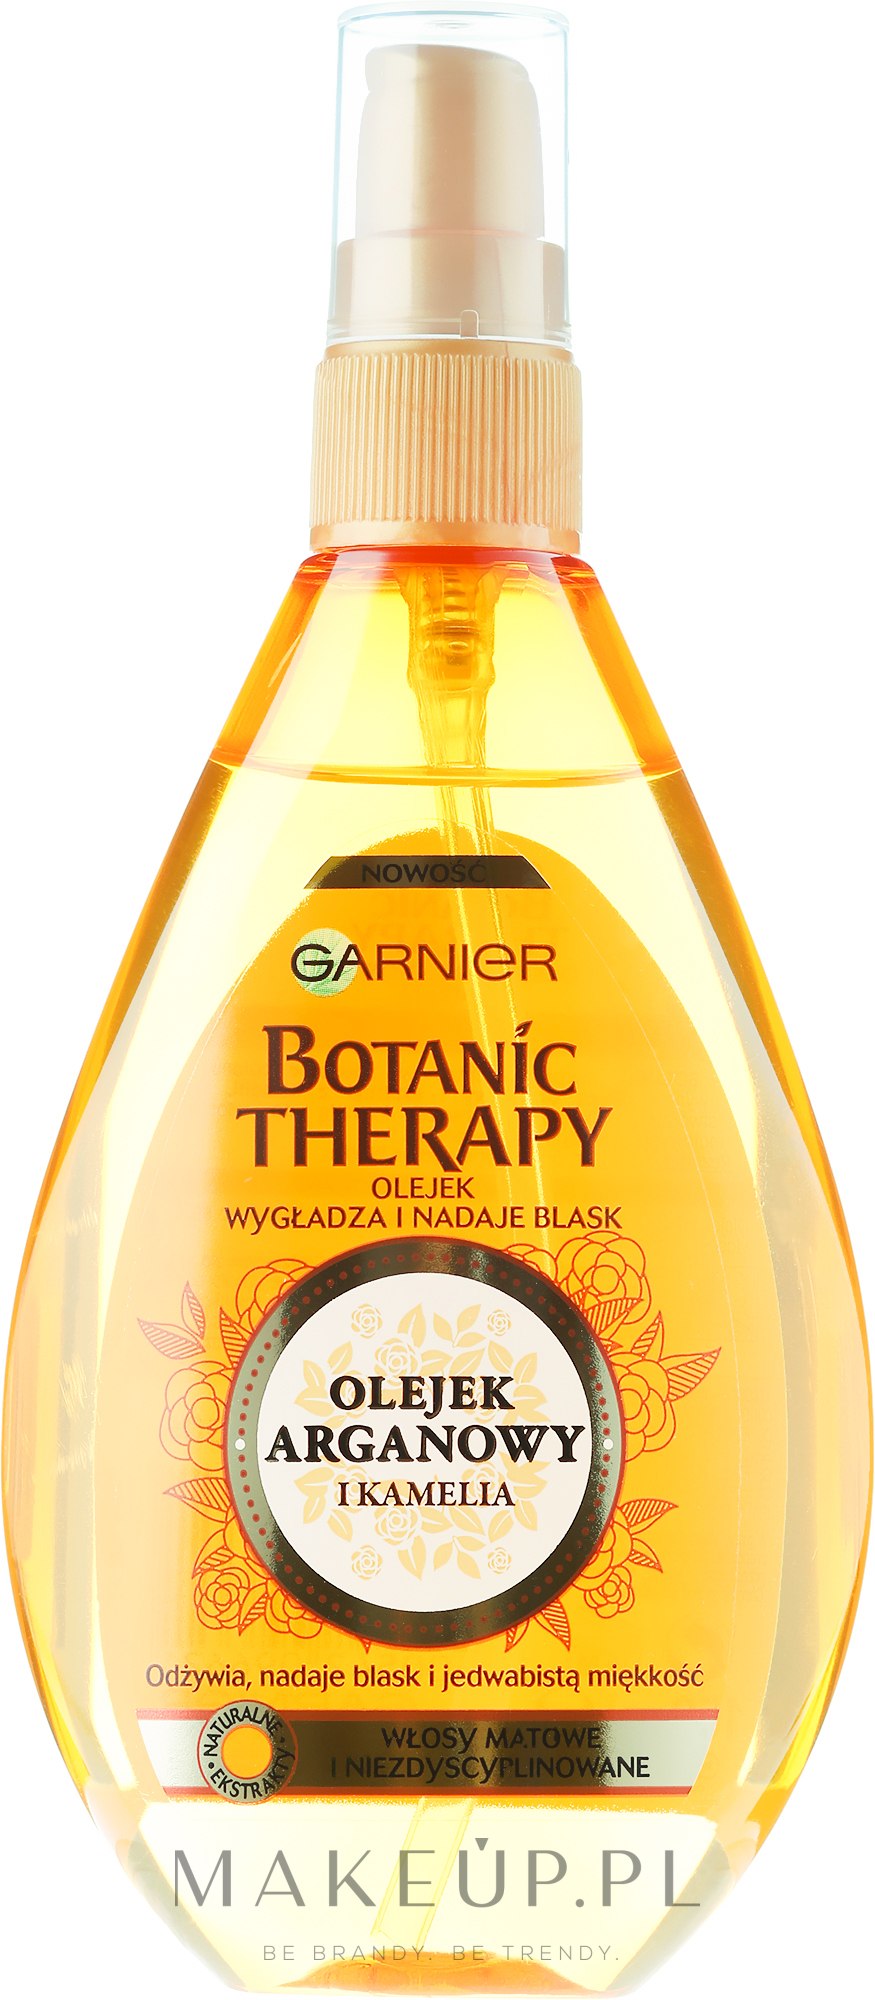 Therapy масло для волос. Масло Garnier Botanic Therapy. Гарнер масло для волос ботаник терапия. Garnier Botanic масло для волос. Гарньер масло для волос ботаник терапия.